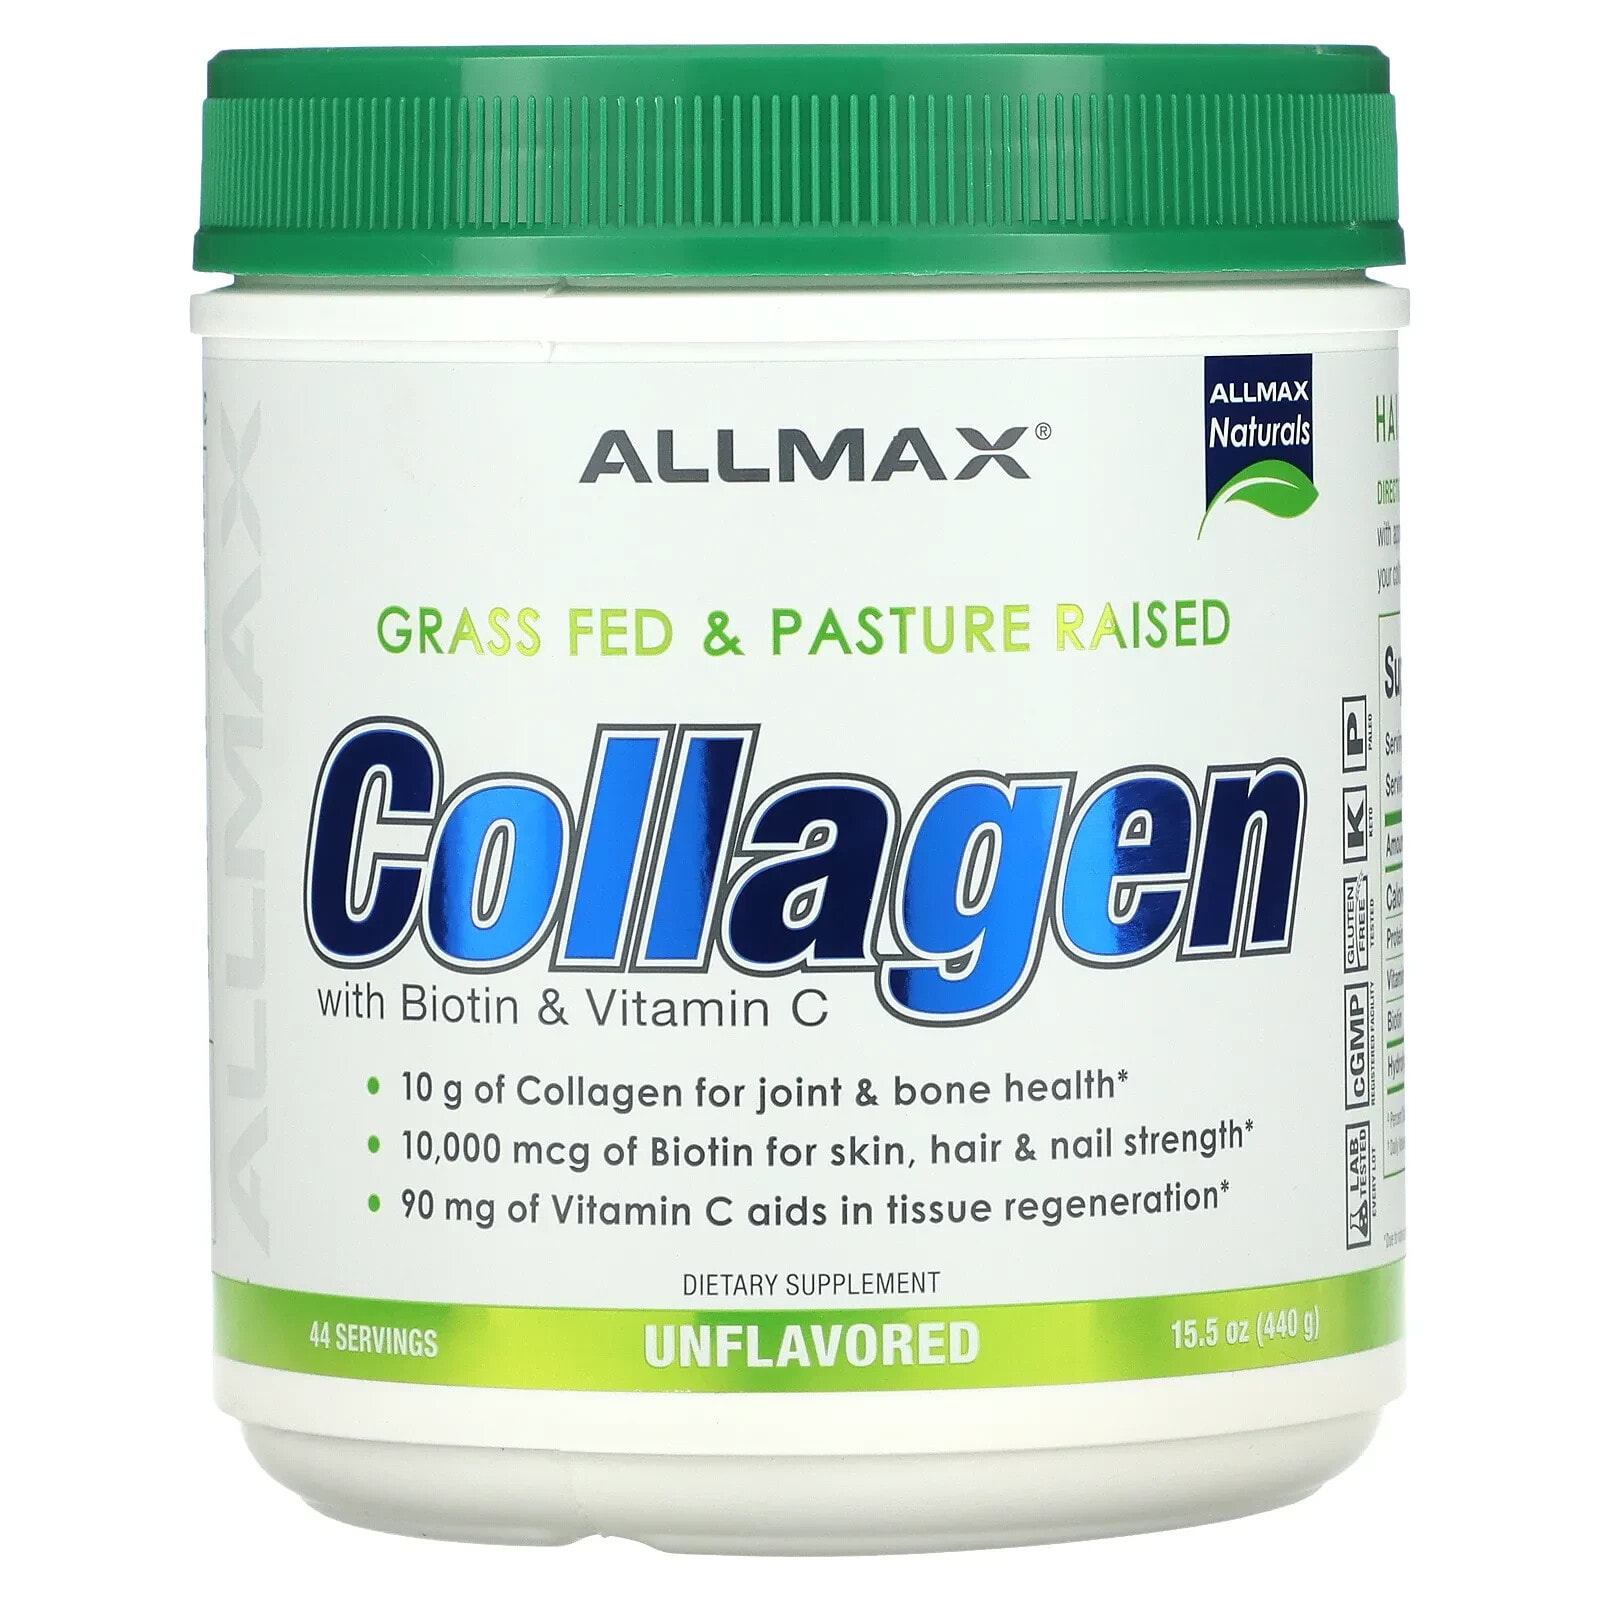 Grass Fed & Pasture Raised Collagen with Biotin & Vitamin C, Unflavored, 15.5 oz (440 g)